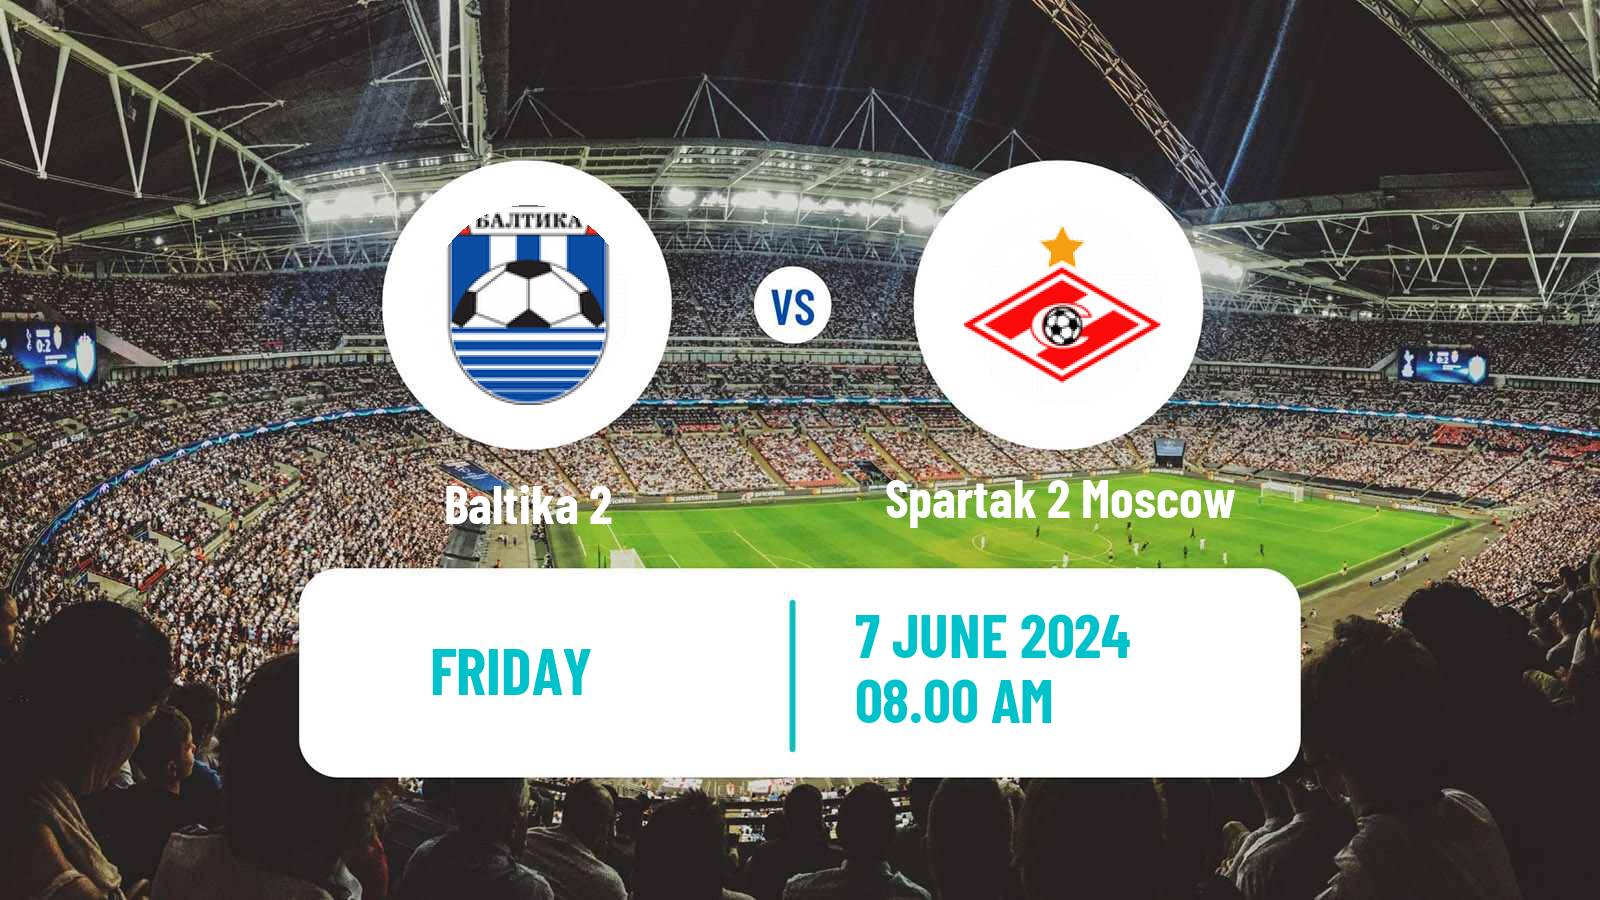 Soccer FNL 2 Division B Group 2 Baltika 2 - Spartak 2 Moscow